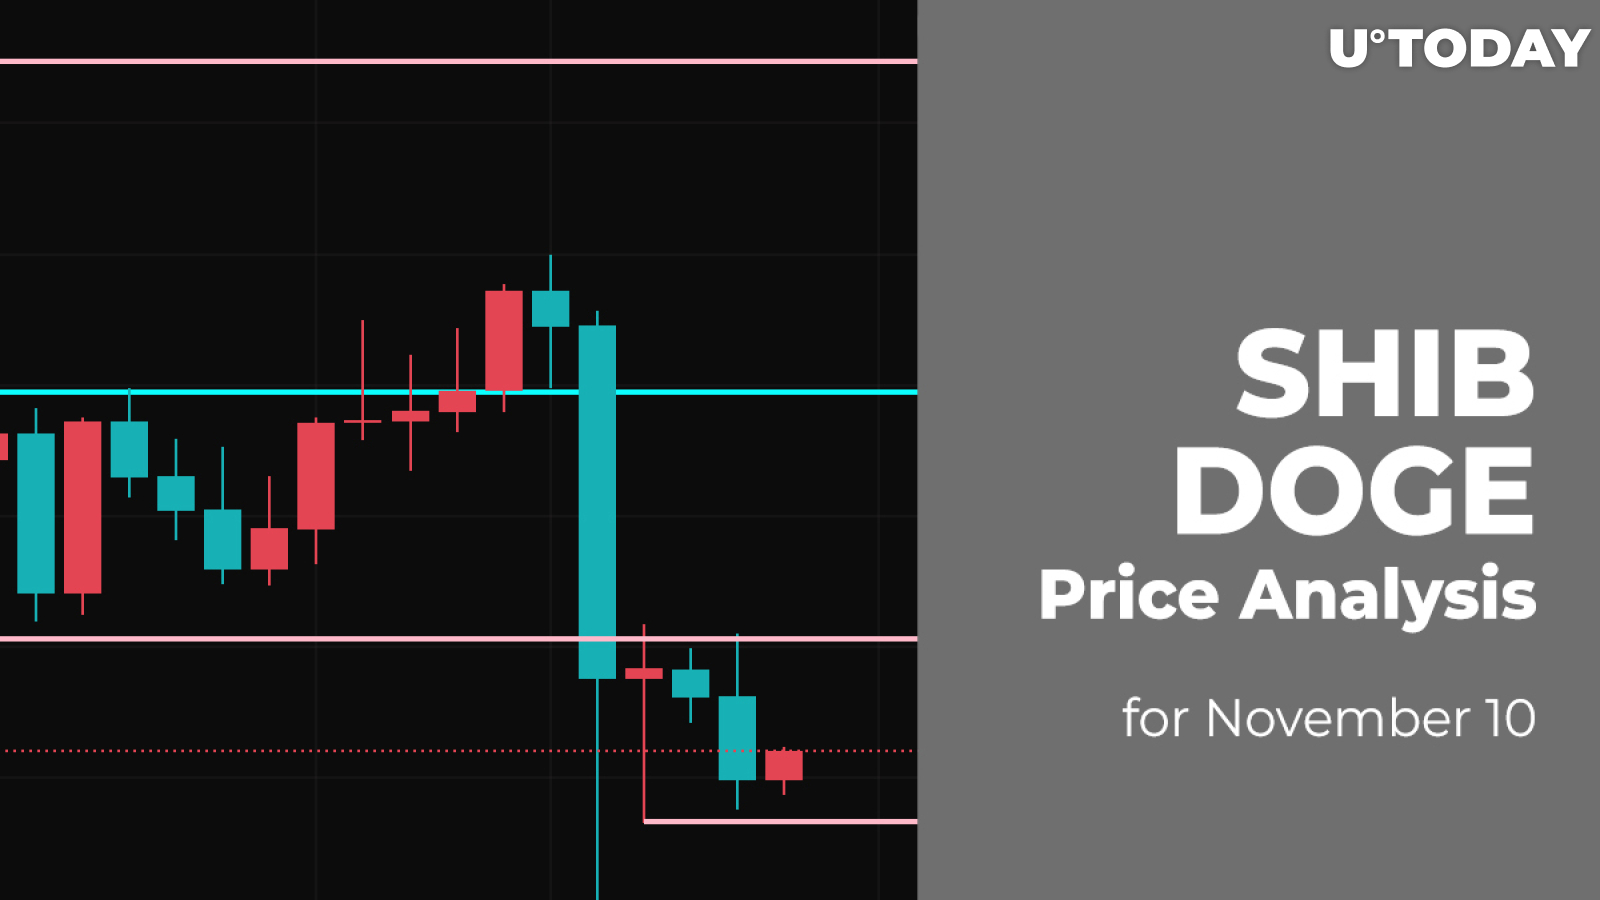 SHIB and DOGE Price Analysis for November 10